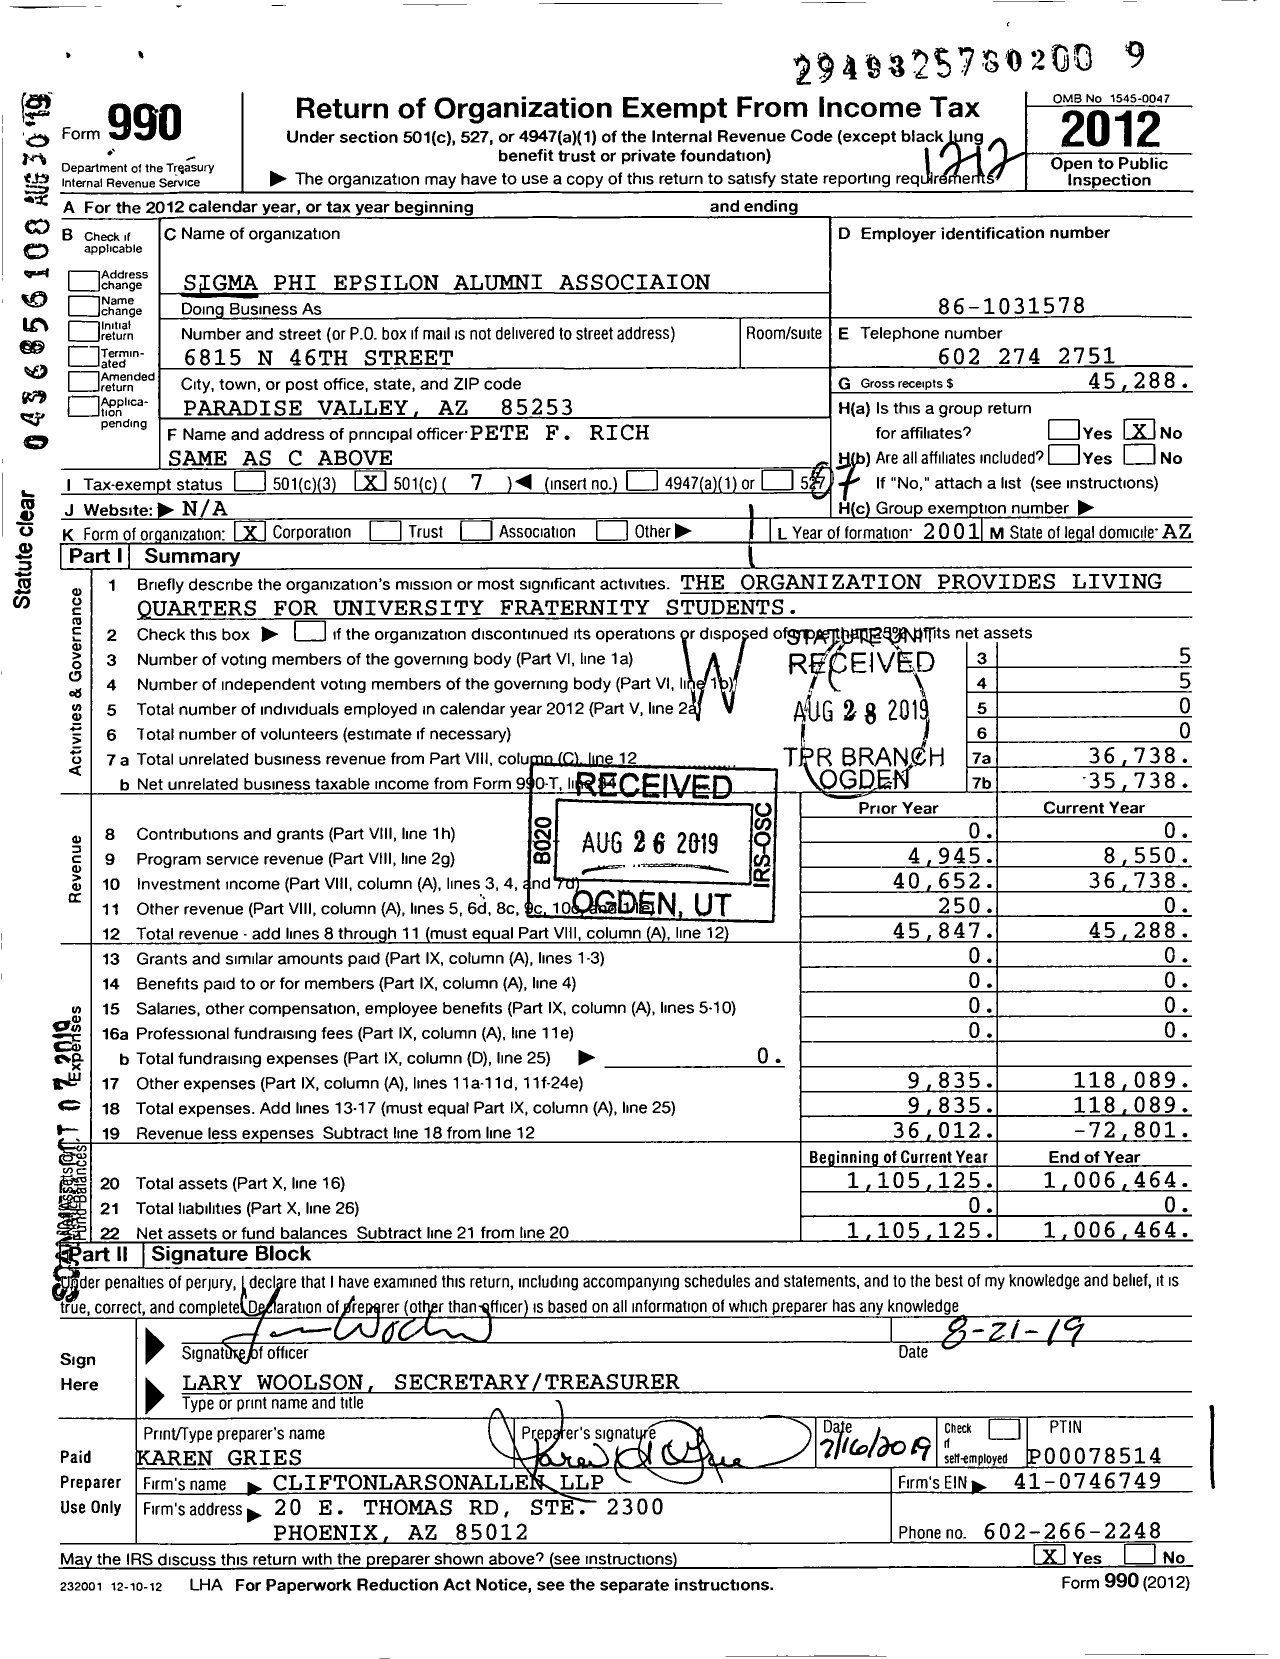 Image of first page of 2012 Form 990O for Arizona Beta of Sigma Phi Epsilon Alumni Association